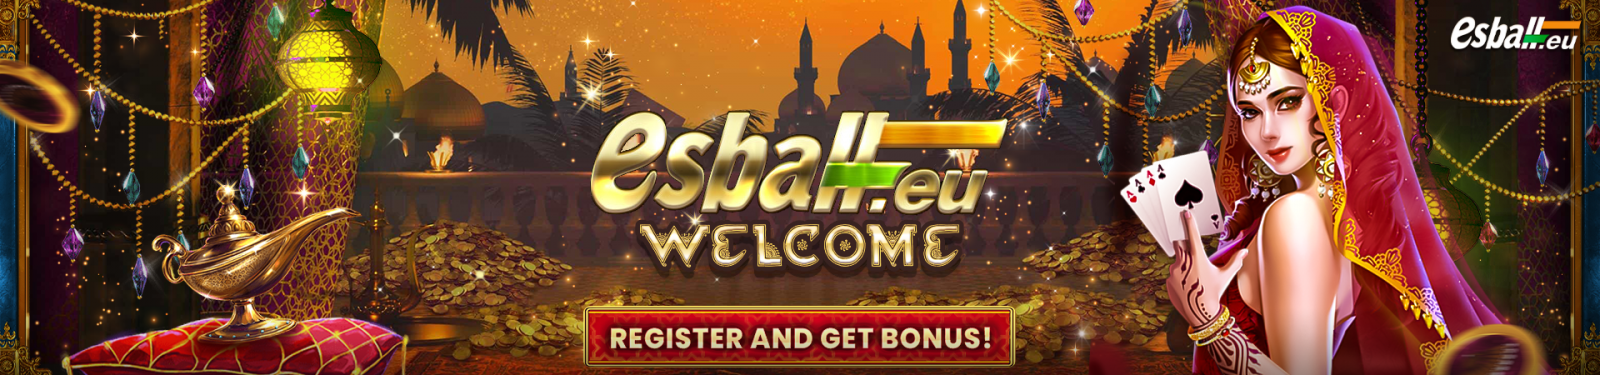 India Best Online Casino - Esball eu Live Games